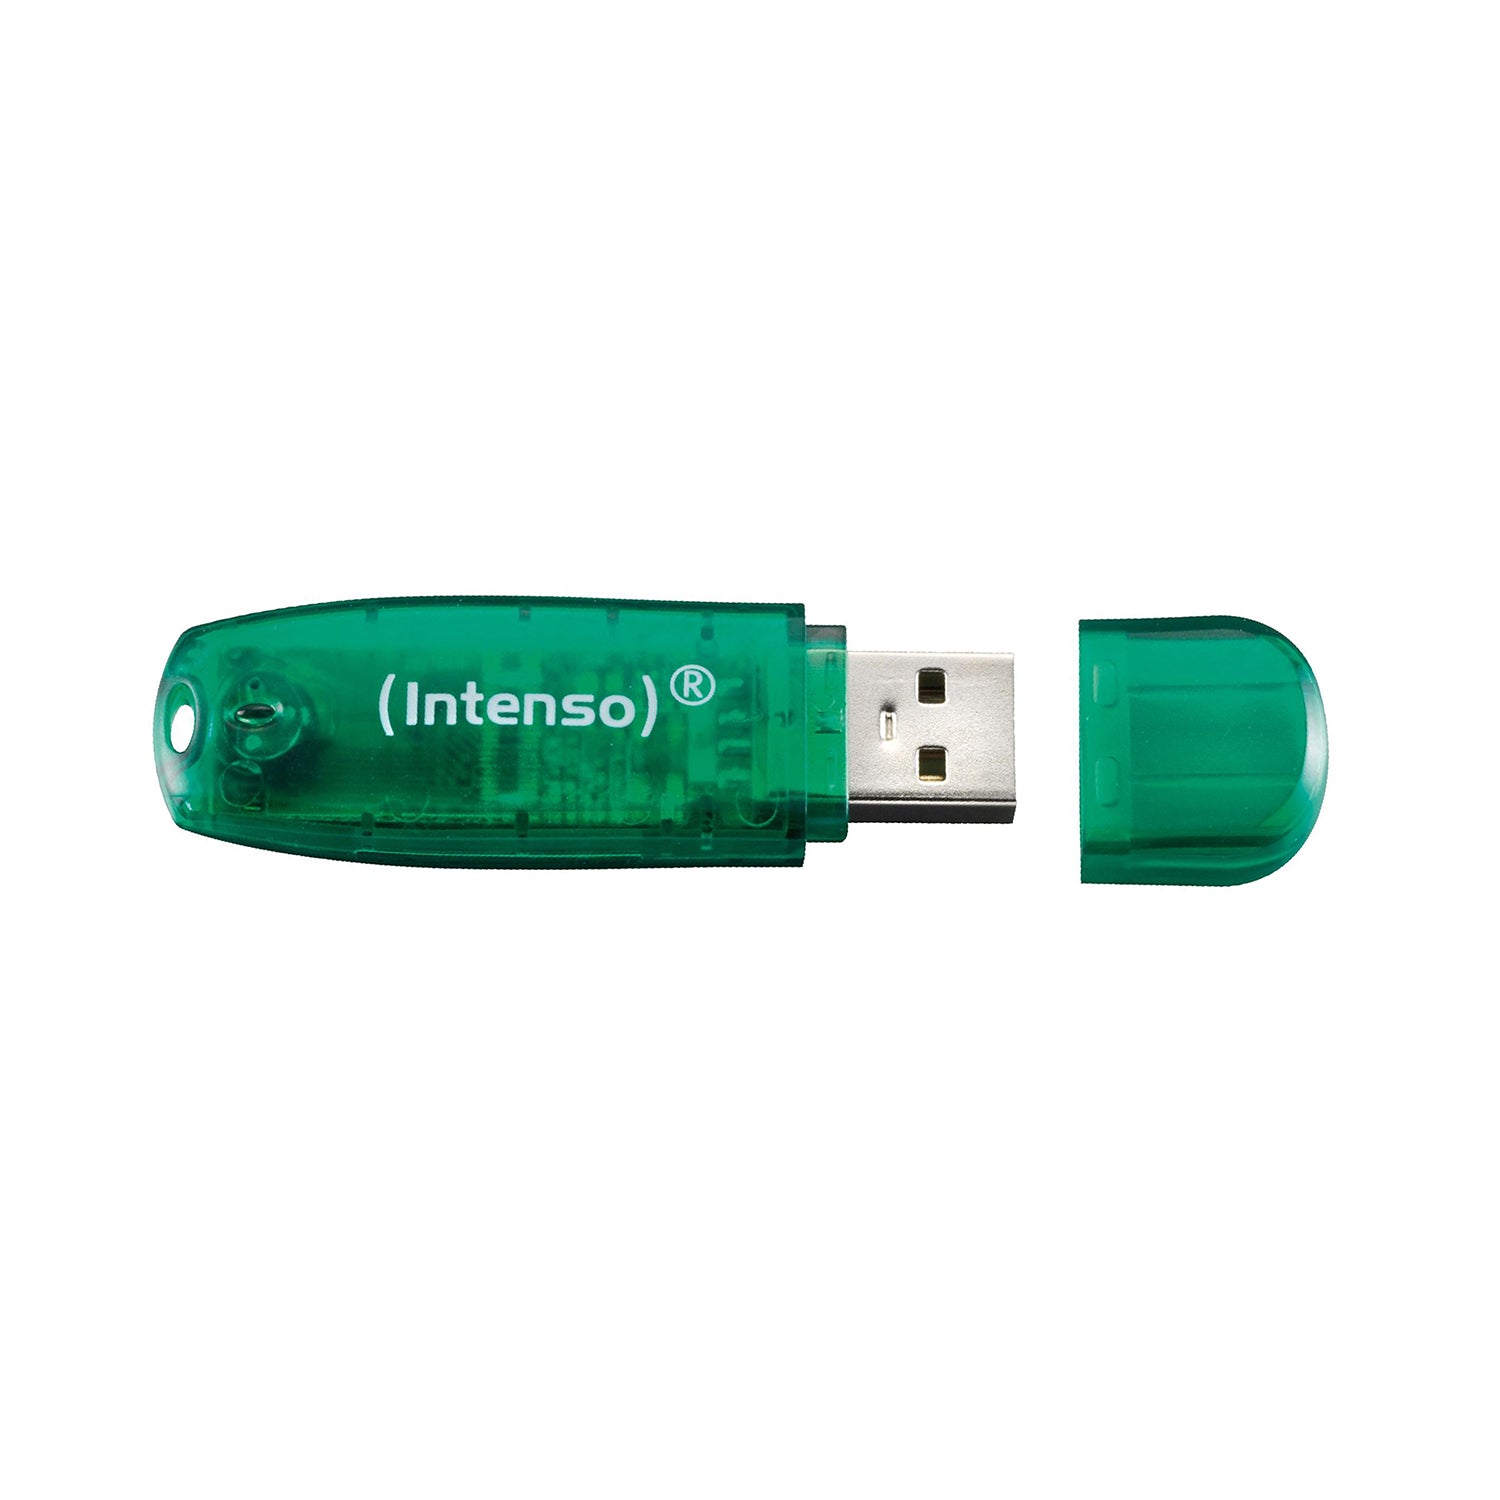 Intenso - Rainbow Line - Clé USB 2.0 - 8Gb